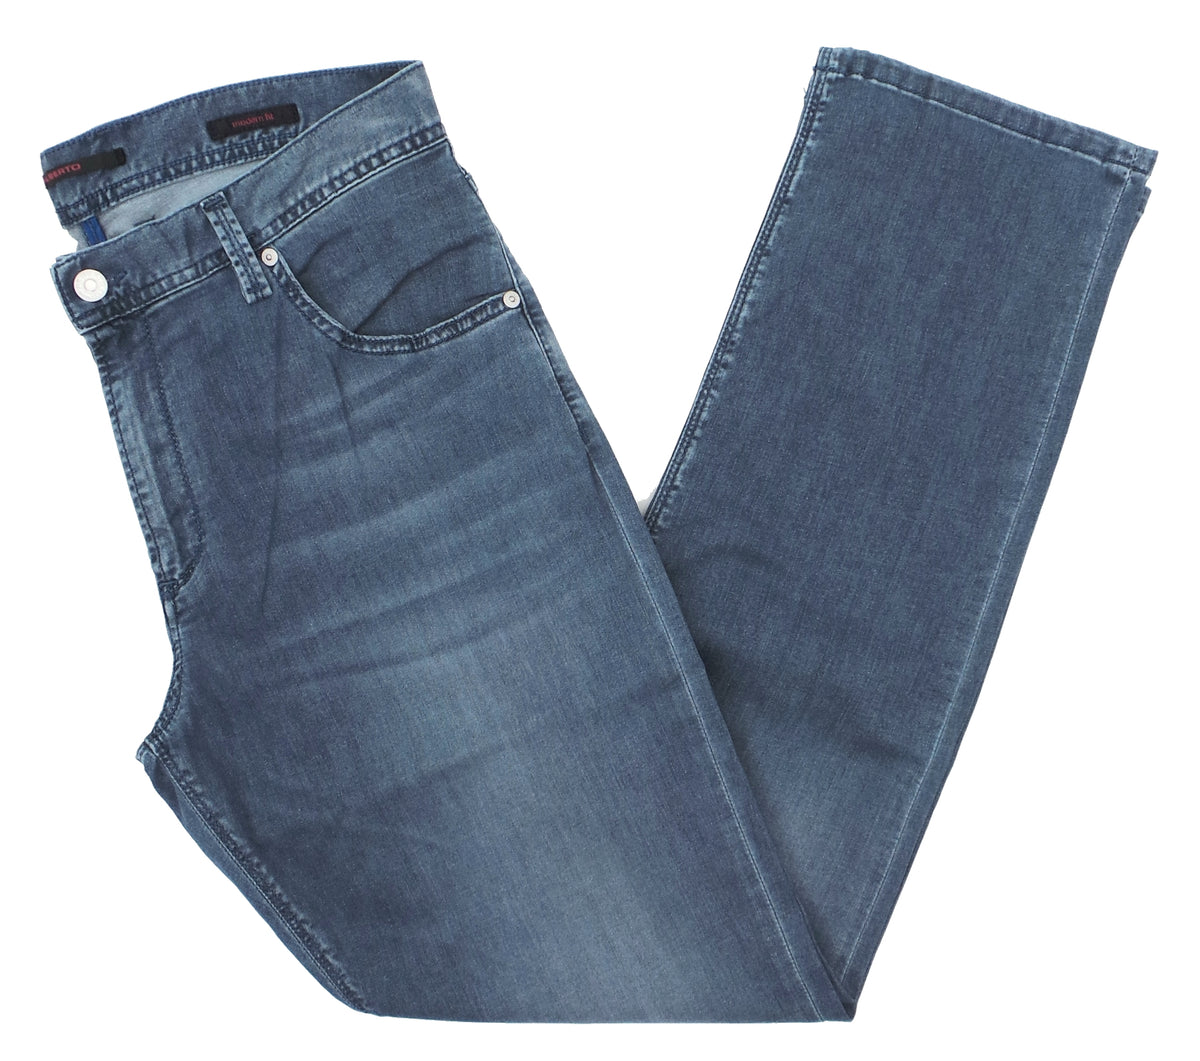 Alberto Stone 1577 Modern Fit Lightweight Stretch Tencel Jeans